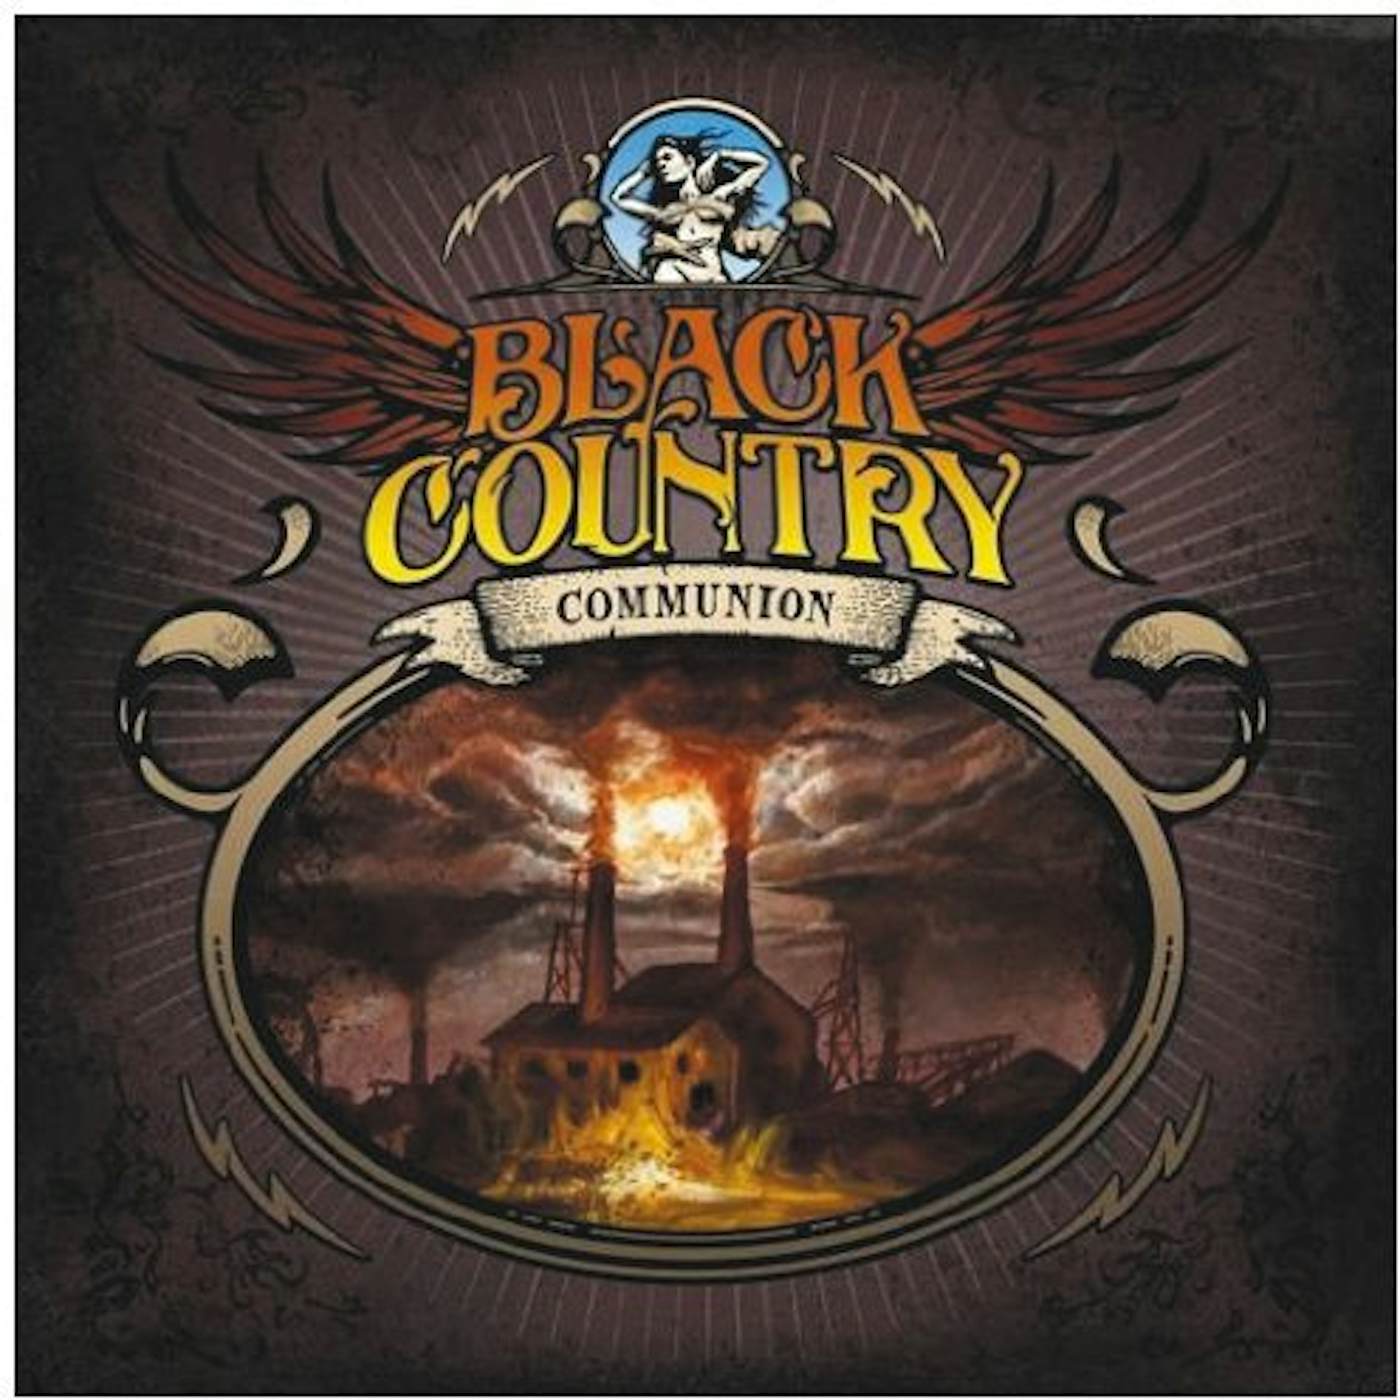 Black Country Communion BLACK COUNTRY Vinyl Record